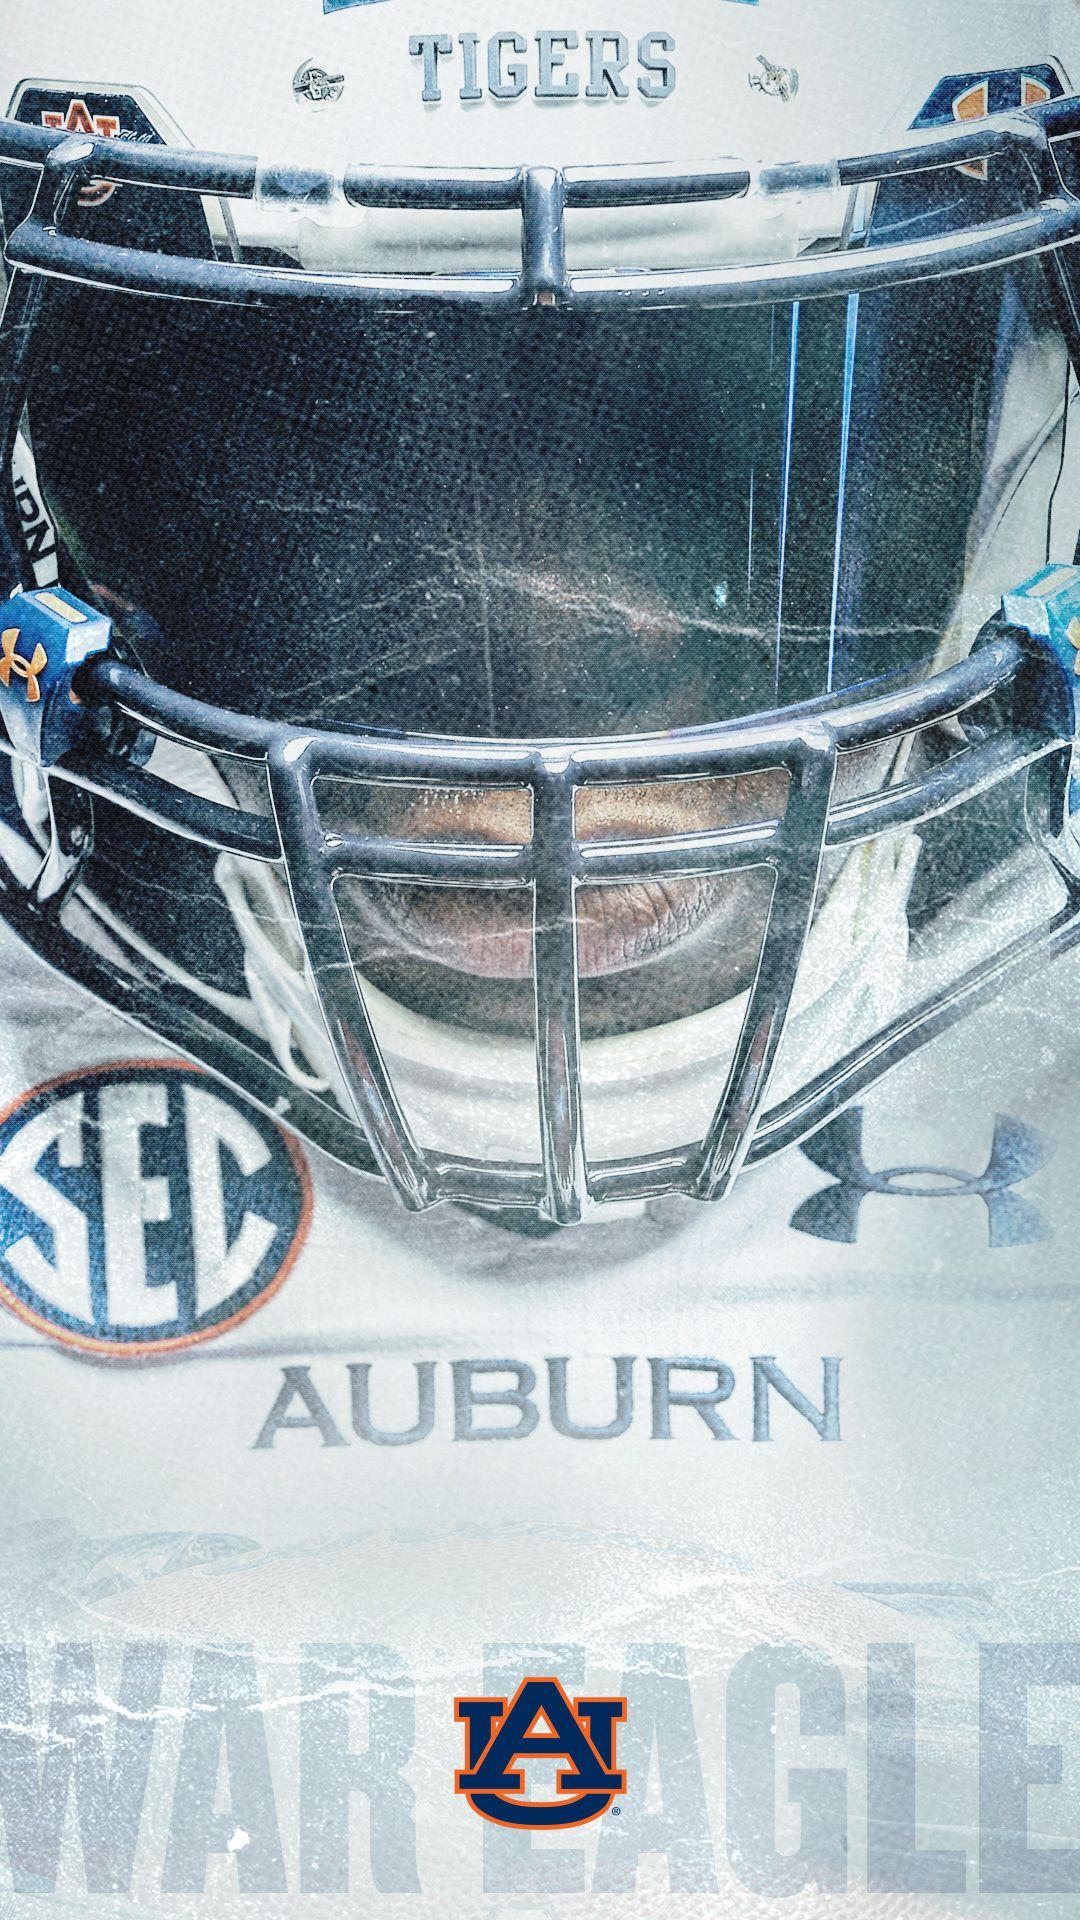 Auburn Football on X New pixels for our WarEagle fam  WallpaperWednesday  httpstcoWWOBThH3r5  X